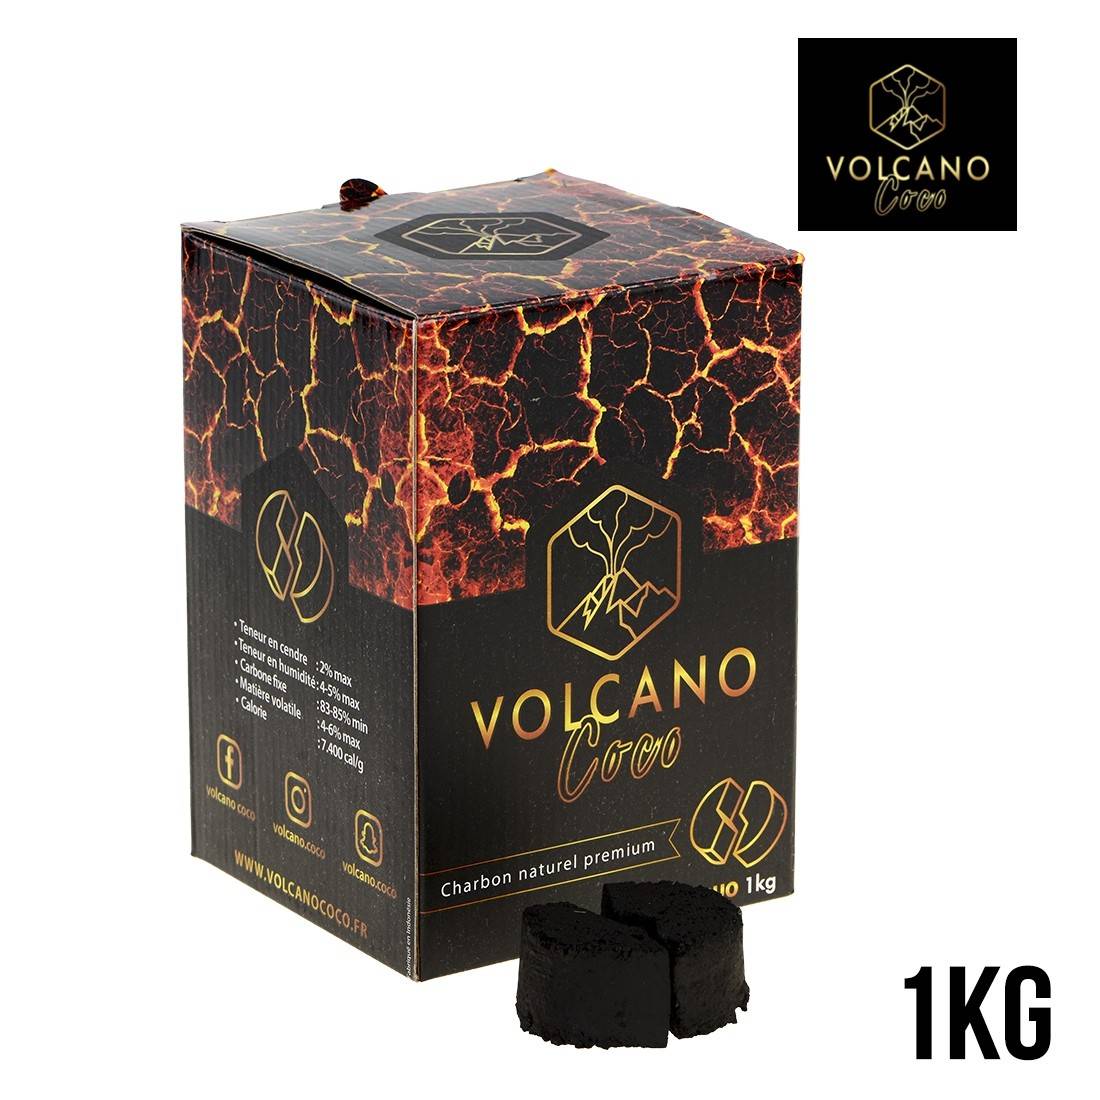 Charbon Volcano Coco Duo 1kg - Disponible chez S Factory !